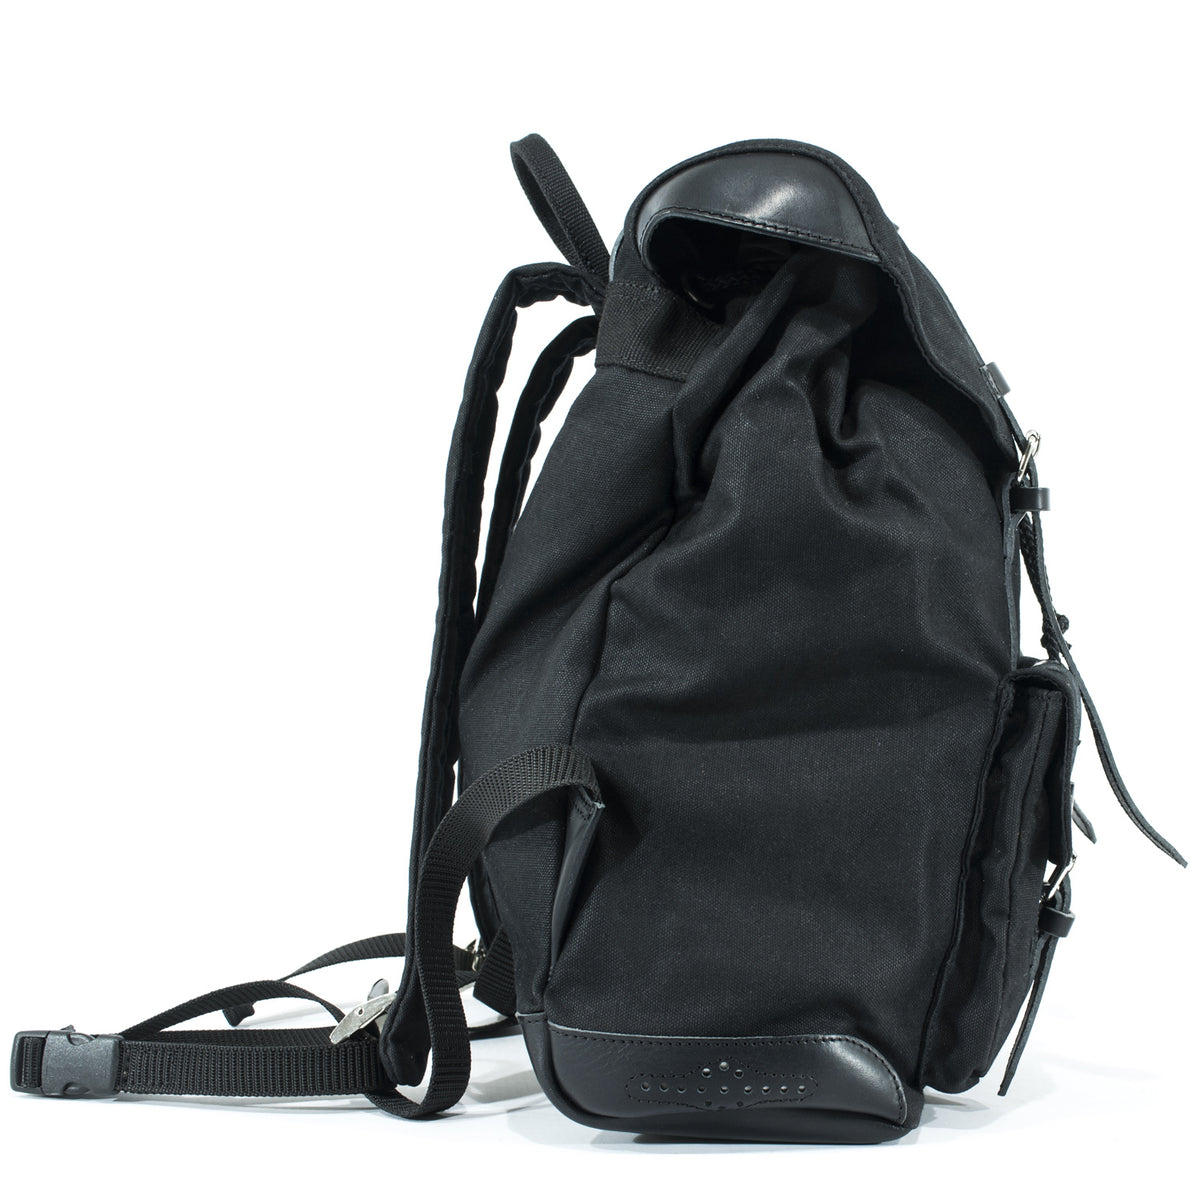 Stylish Black Motorcycle Backpack. - LONGRIDE